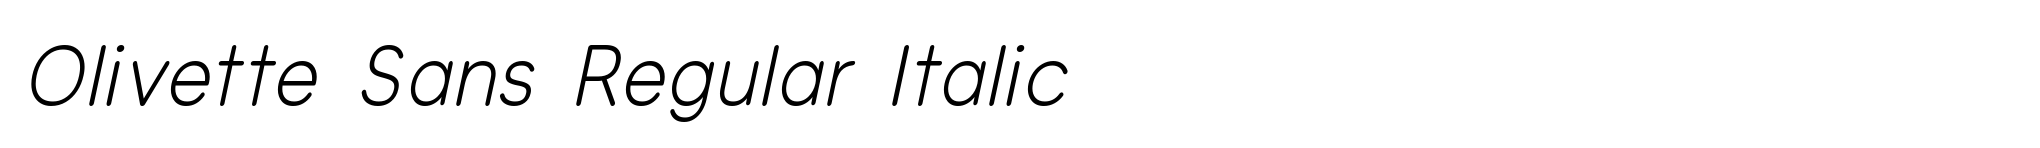 Olivette Sans Regular Italic image